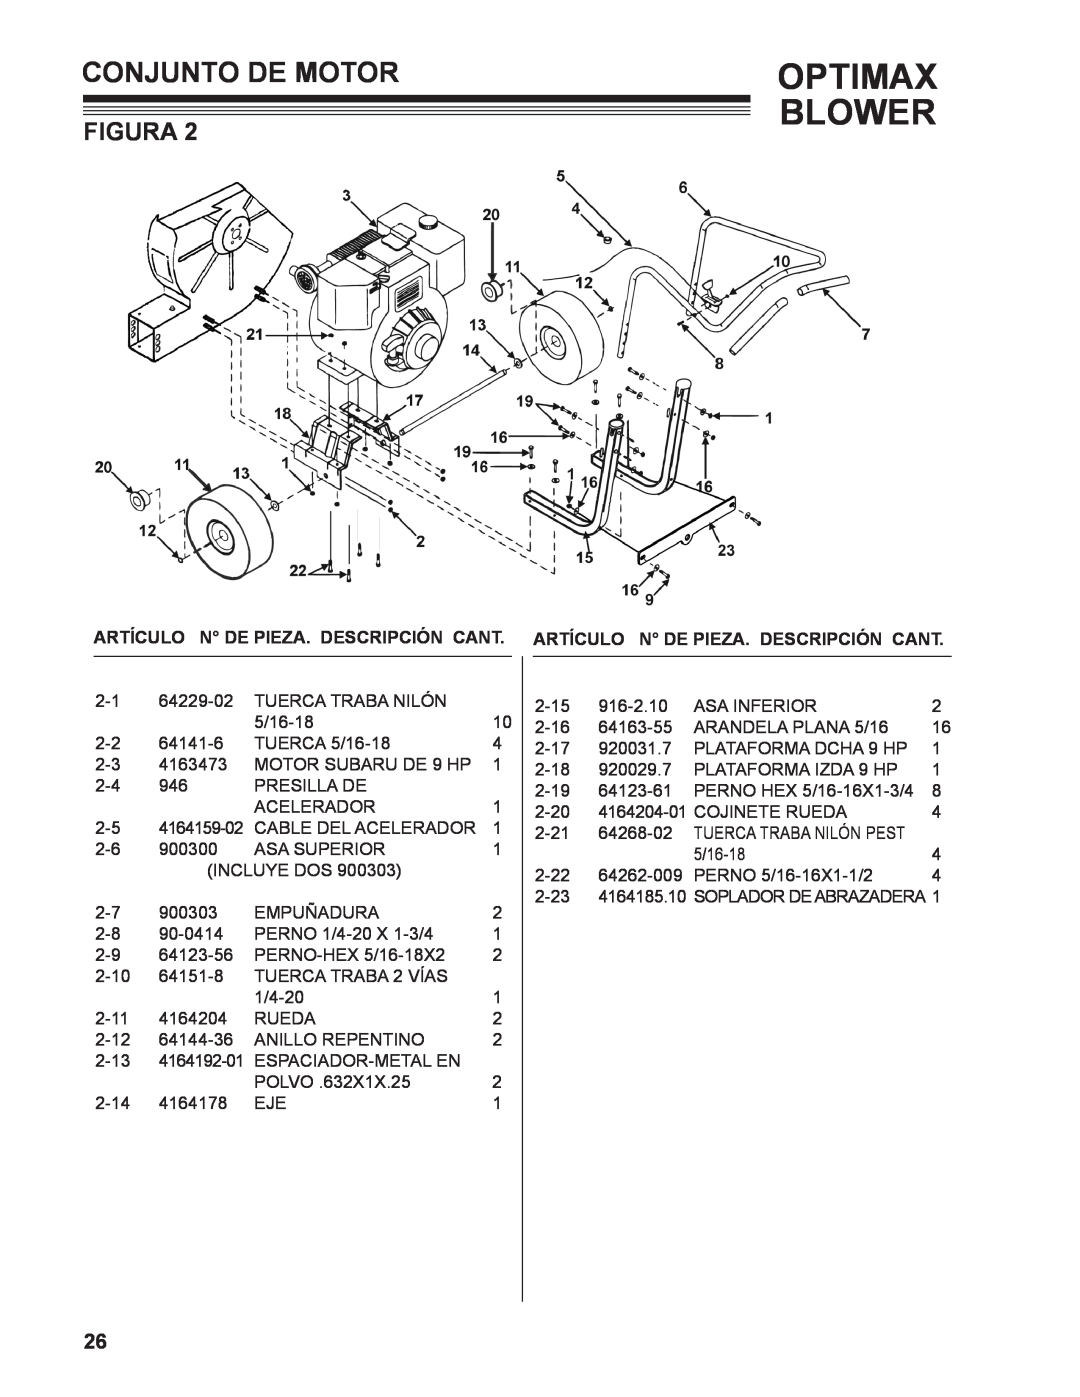 Little Wonder LB901-00-01 technical manual Conjunto De Motor, Optimax Blower, Figura 